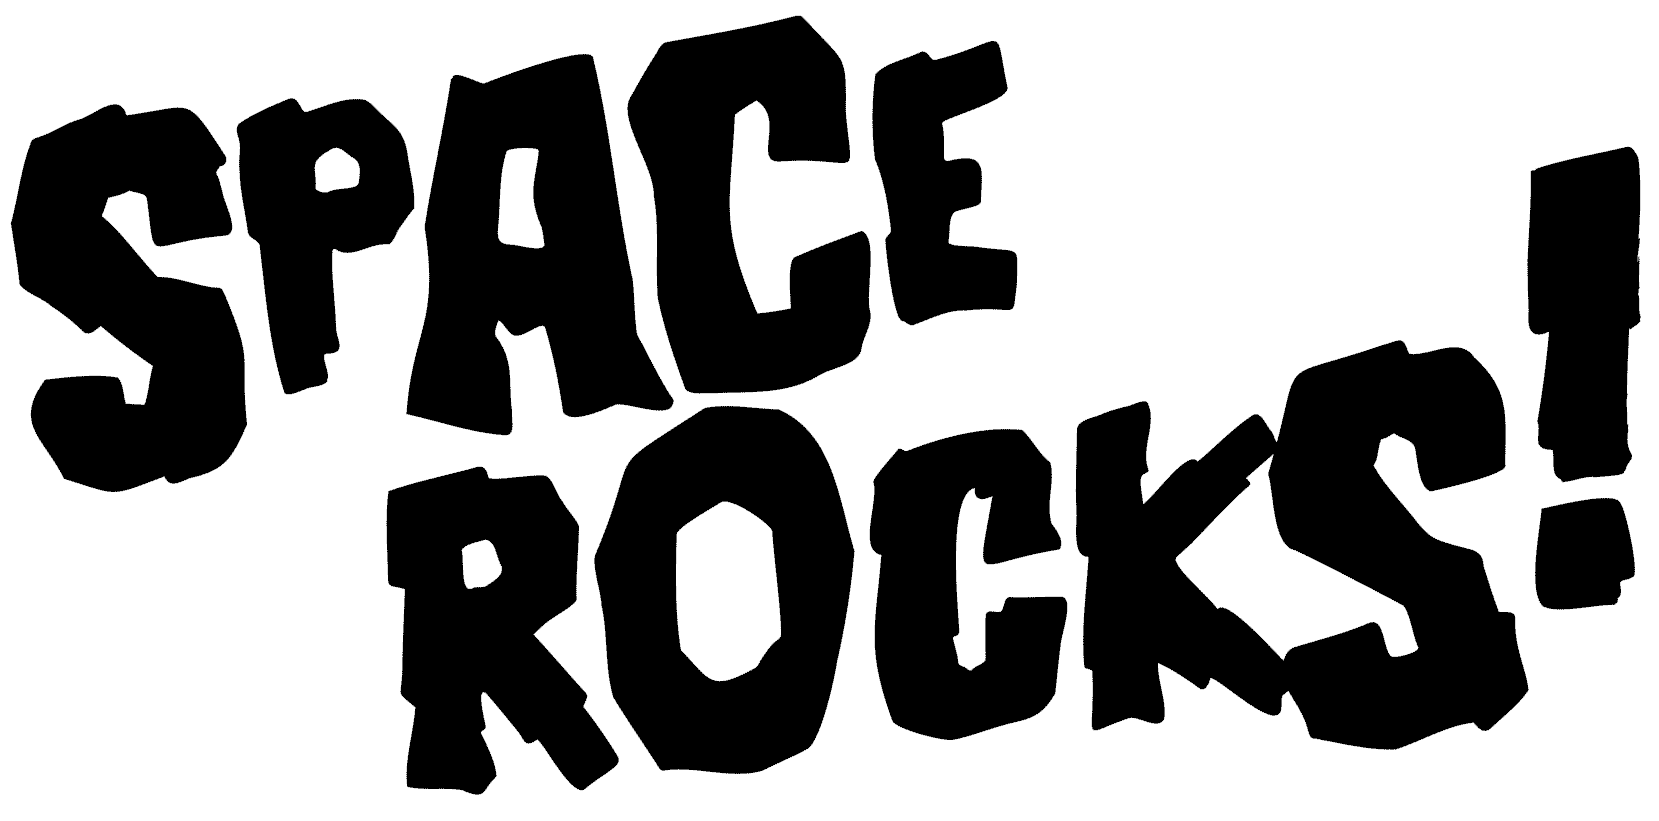 Space Rocks Font Free Download